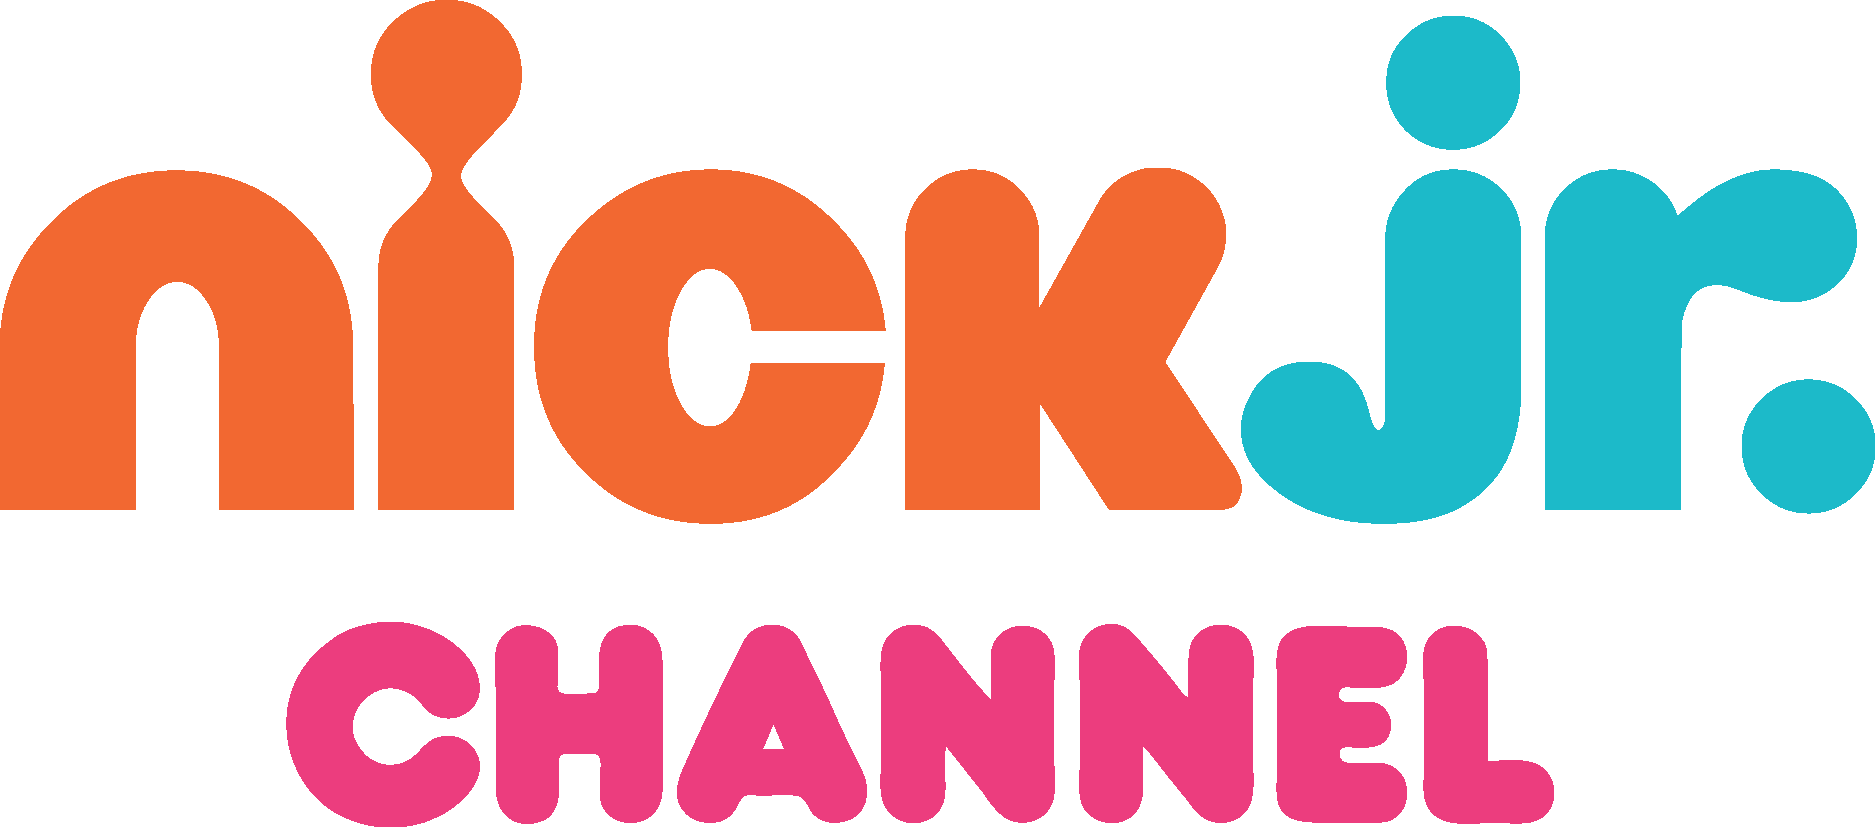 Nick Jr Channel Logo Vector - (.Ai .PNG .SVG .EPS Free Download)